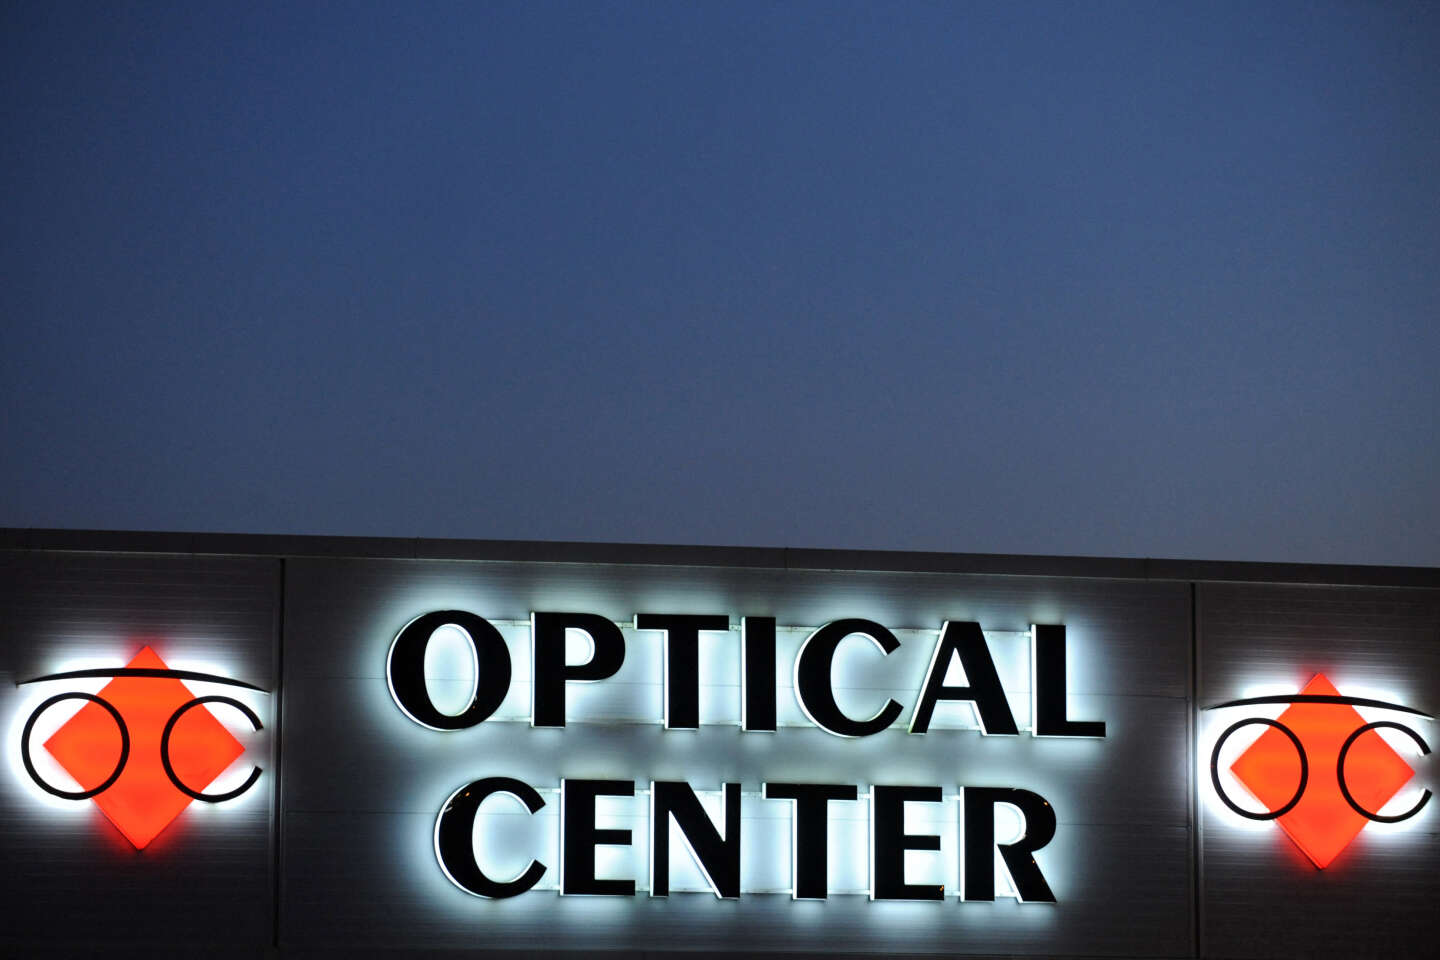 Optical Center under investigation for tax evasion in France